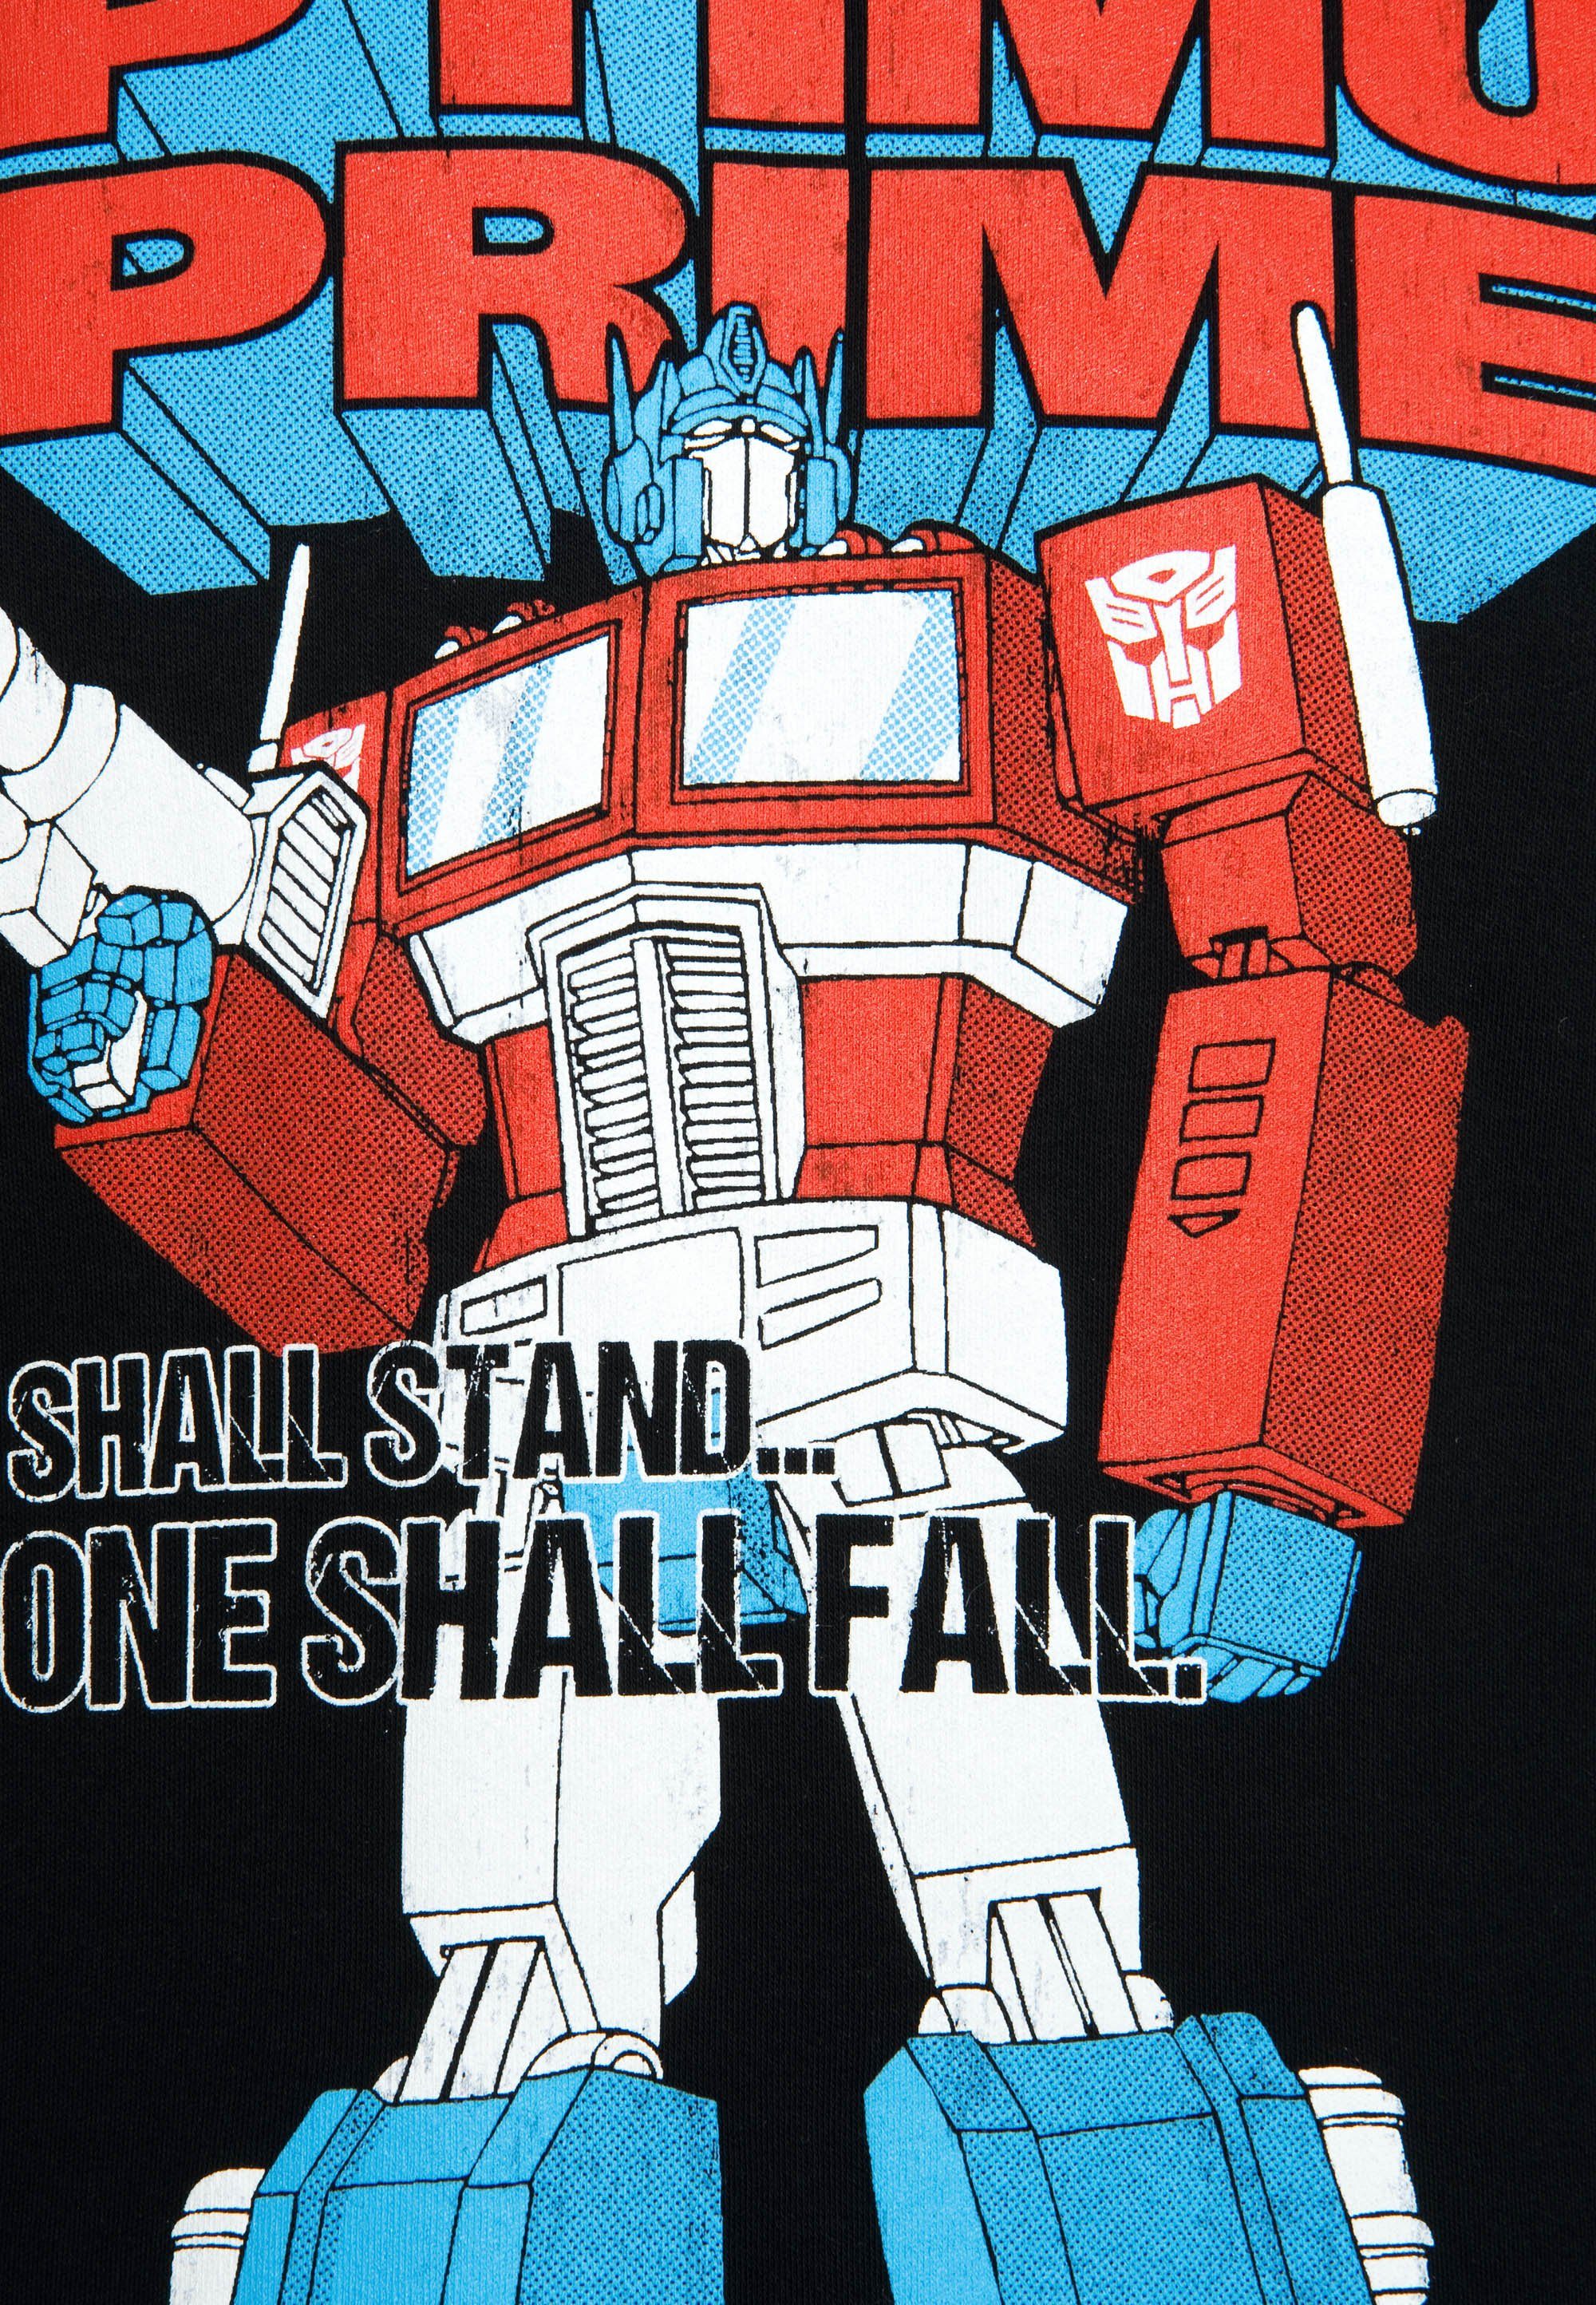 Prime-Print Prime - Stand LOGOSHIRT One - Transformers Optimus mit T-Shirt Shall Oprimus